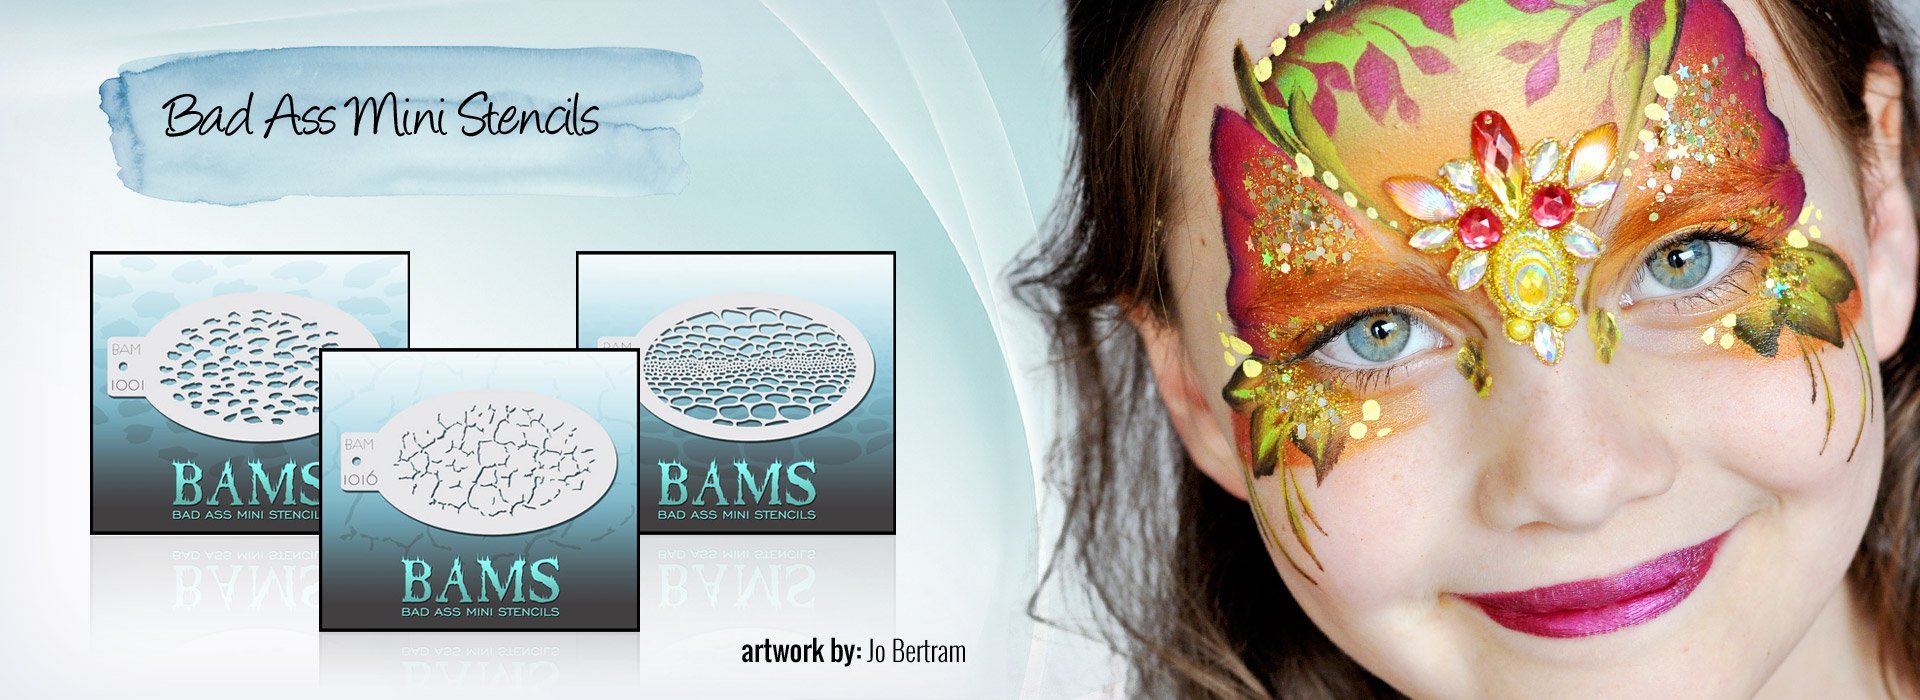 BAMs | Silly Farm Supplies